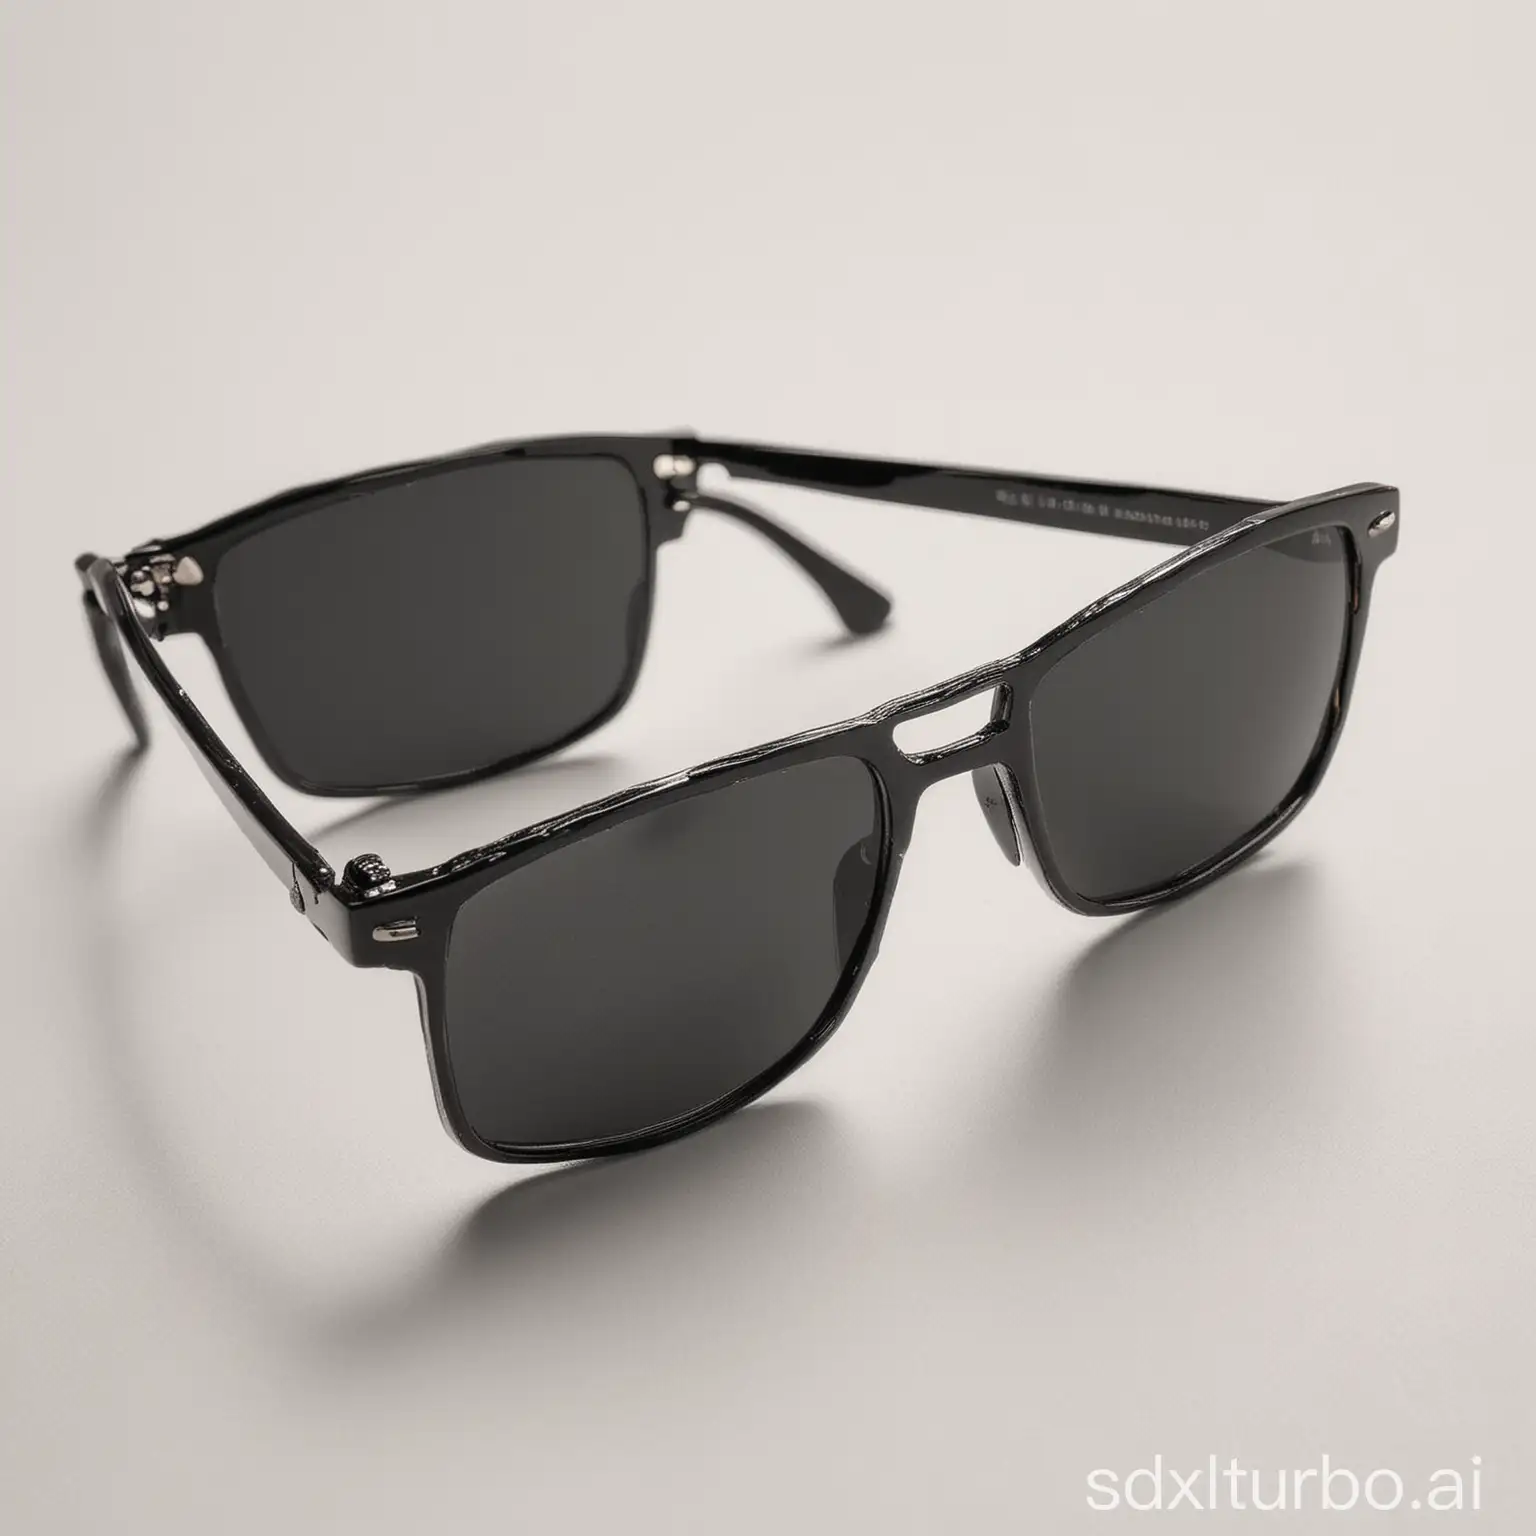 Black-Metal-Rectangular-Sunglasses-on-White-Surface